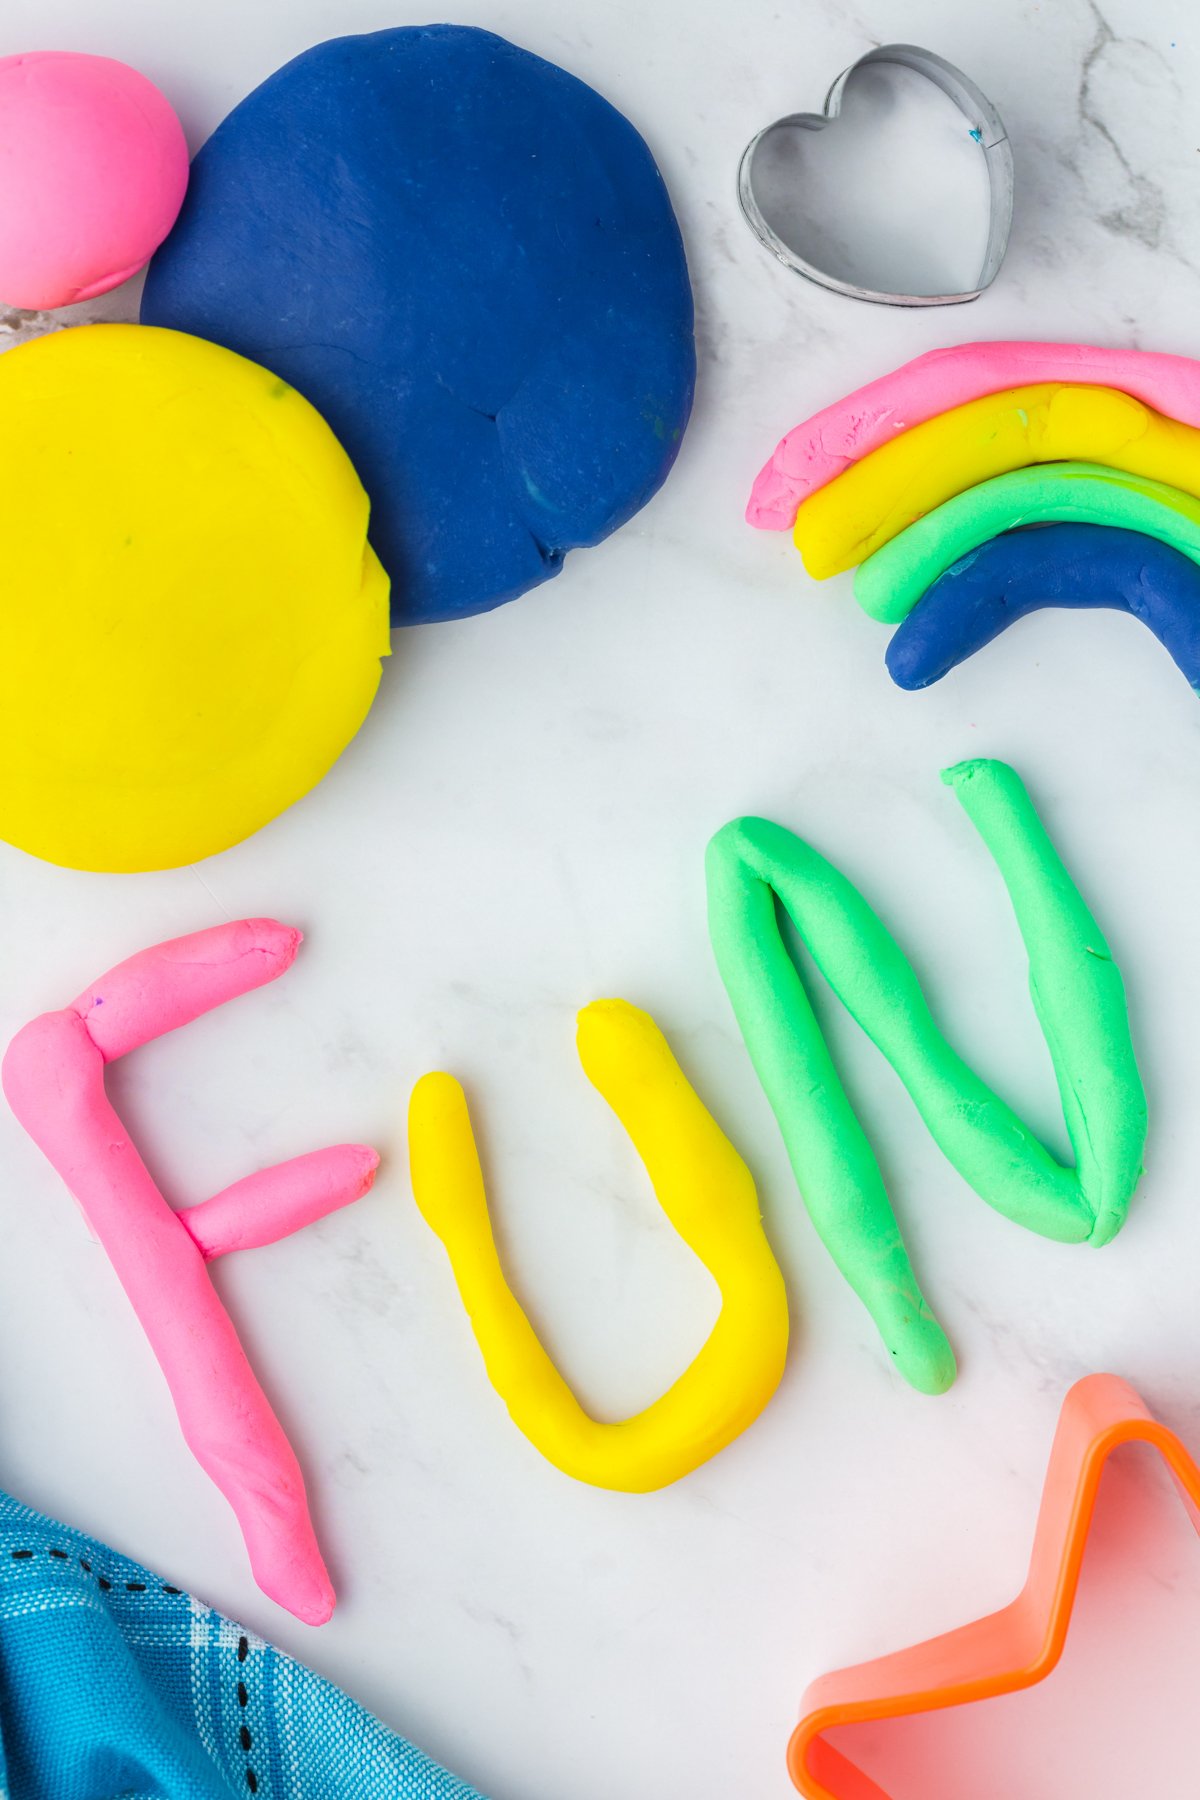 edible playdough made into FUN letters